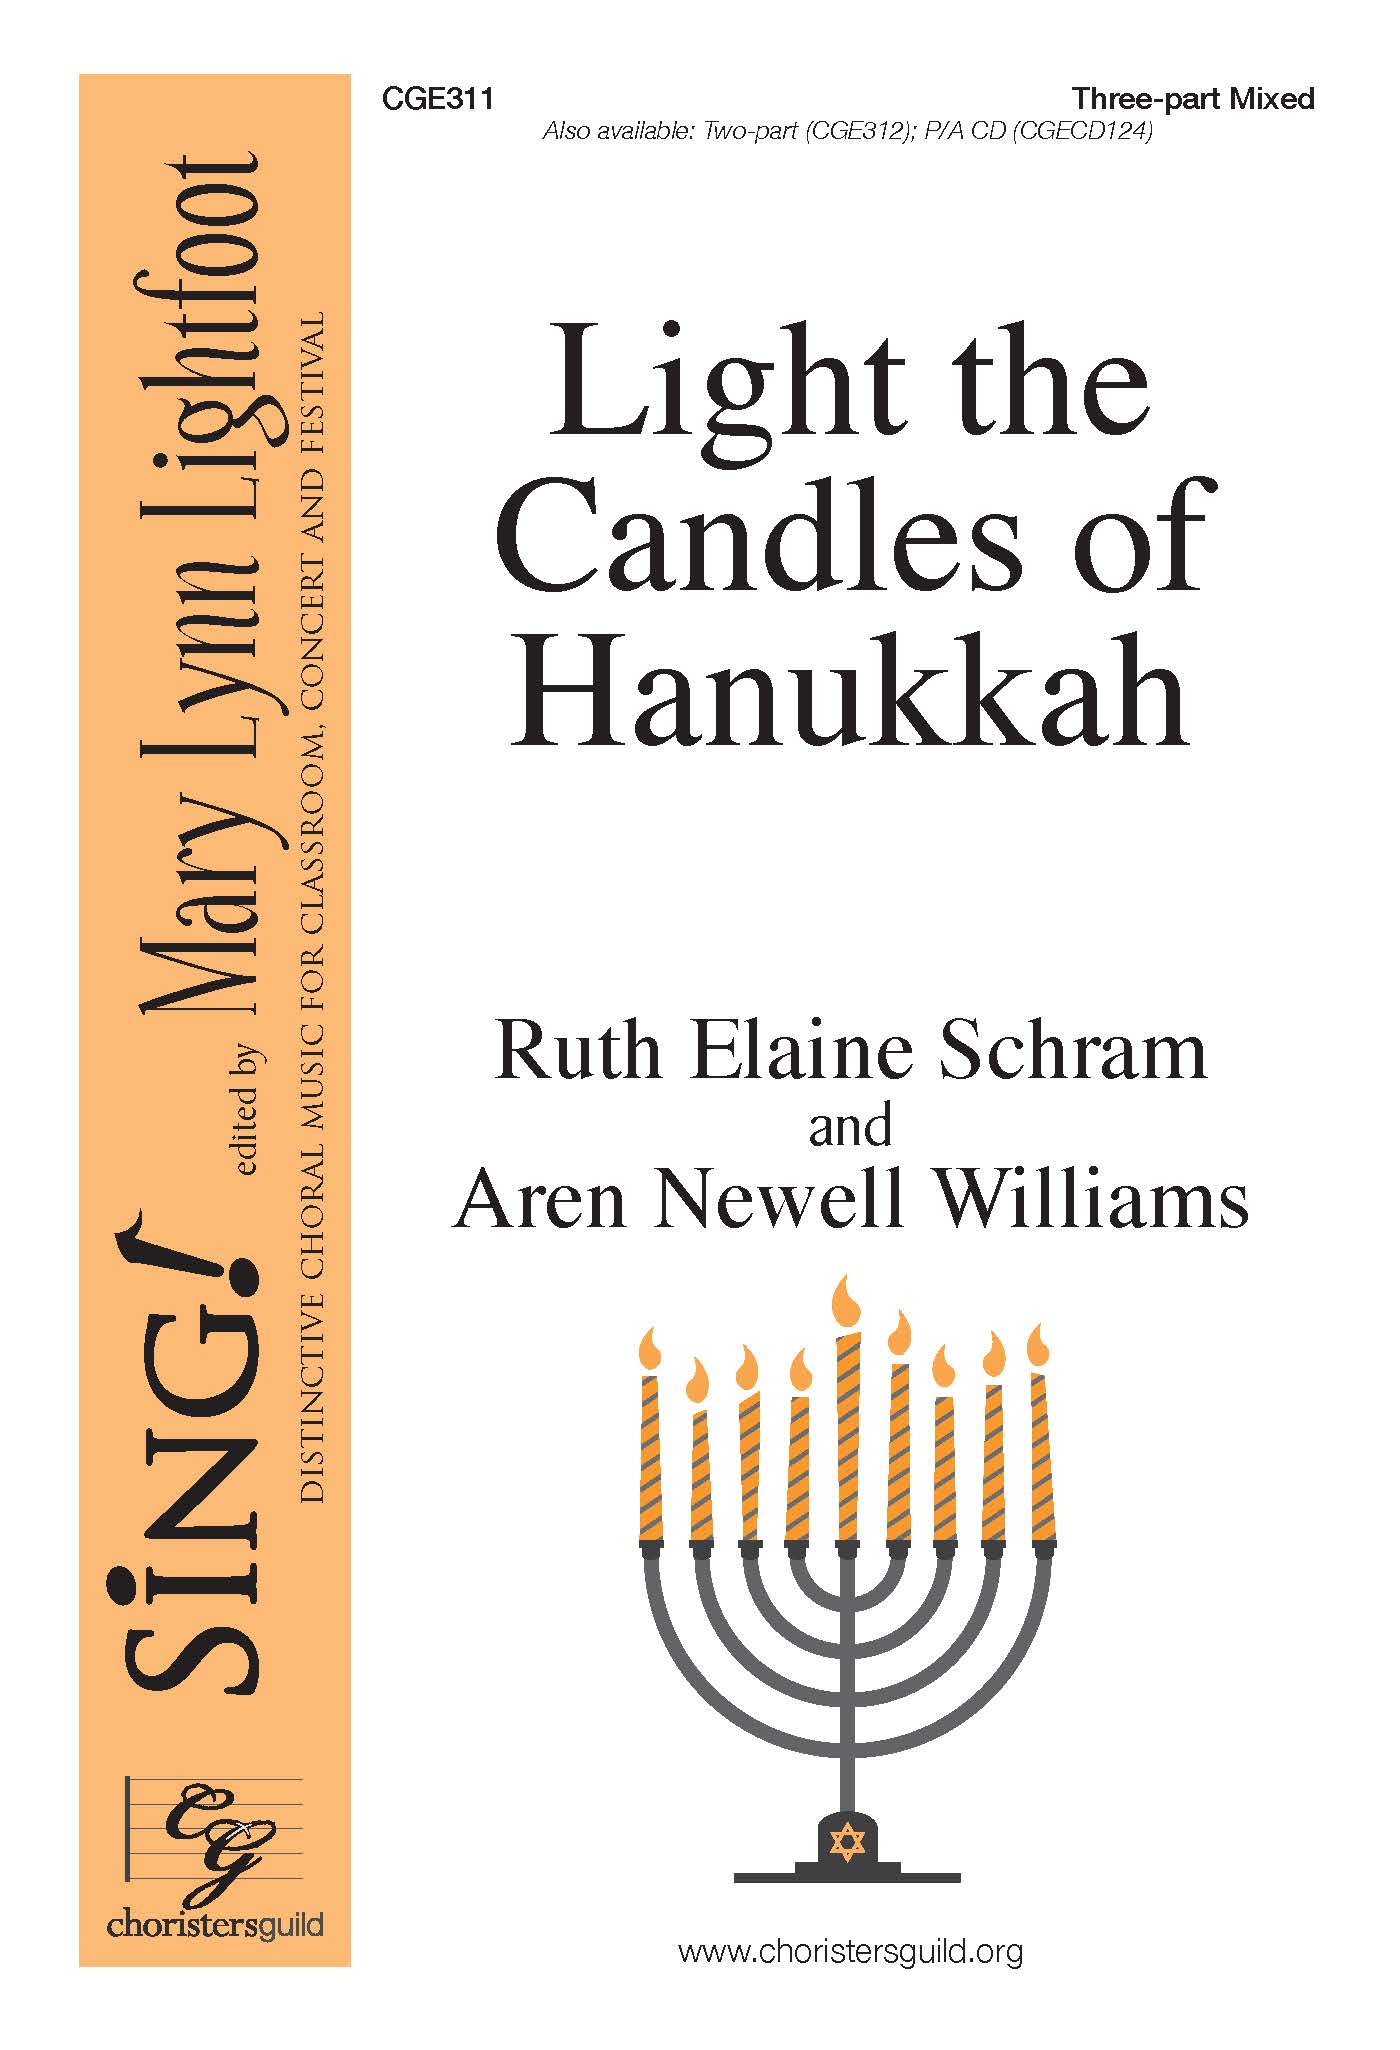 Light the Candles of Hanukkah - Three-part Mixed